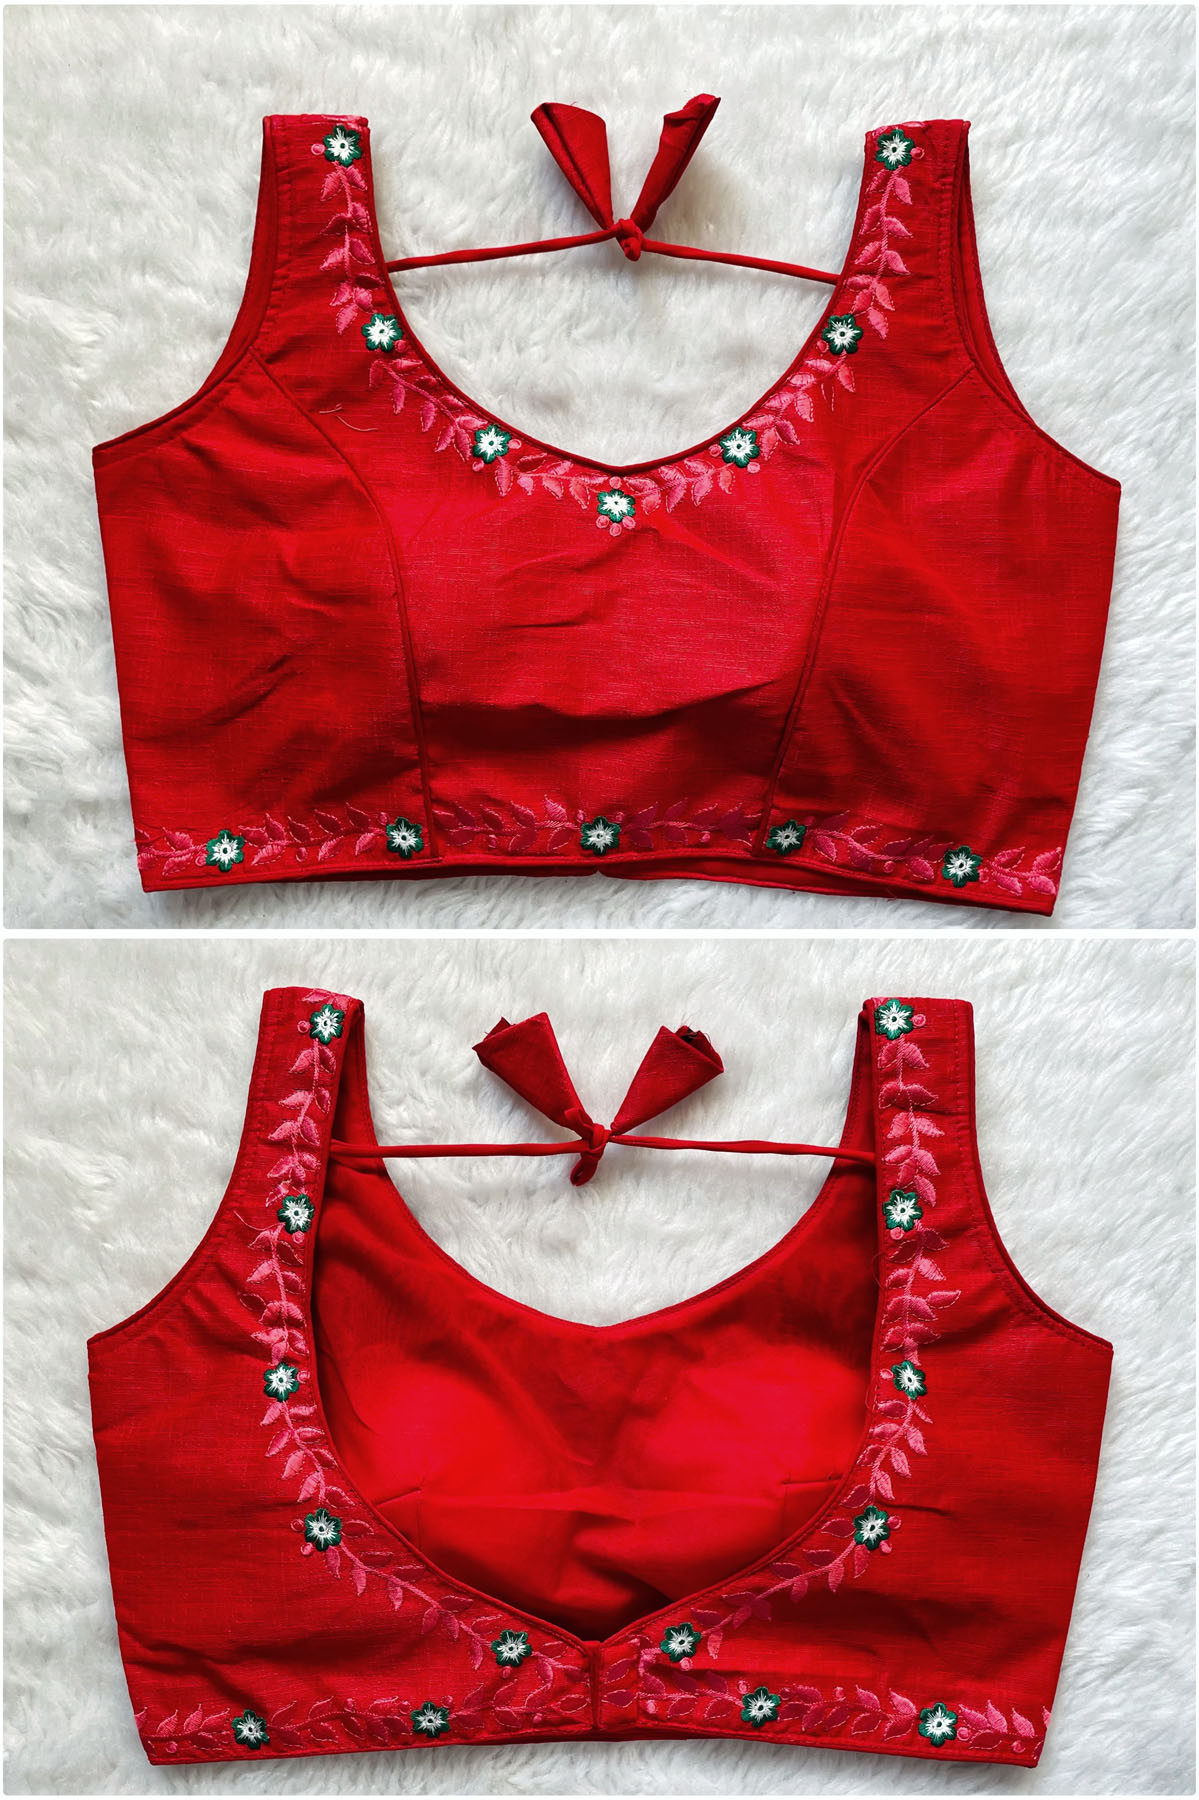 Embroidered Phantom Silk Designer Blouse - Red(XXL)